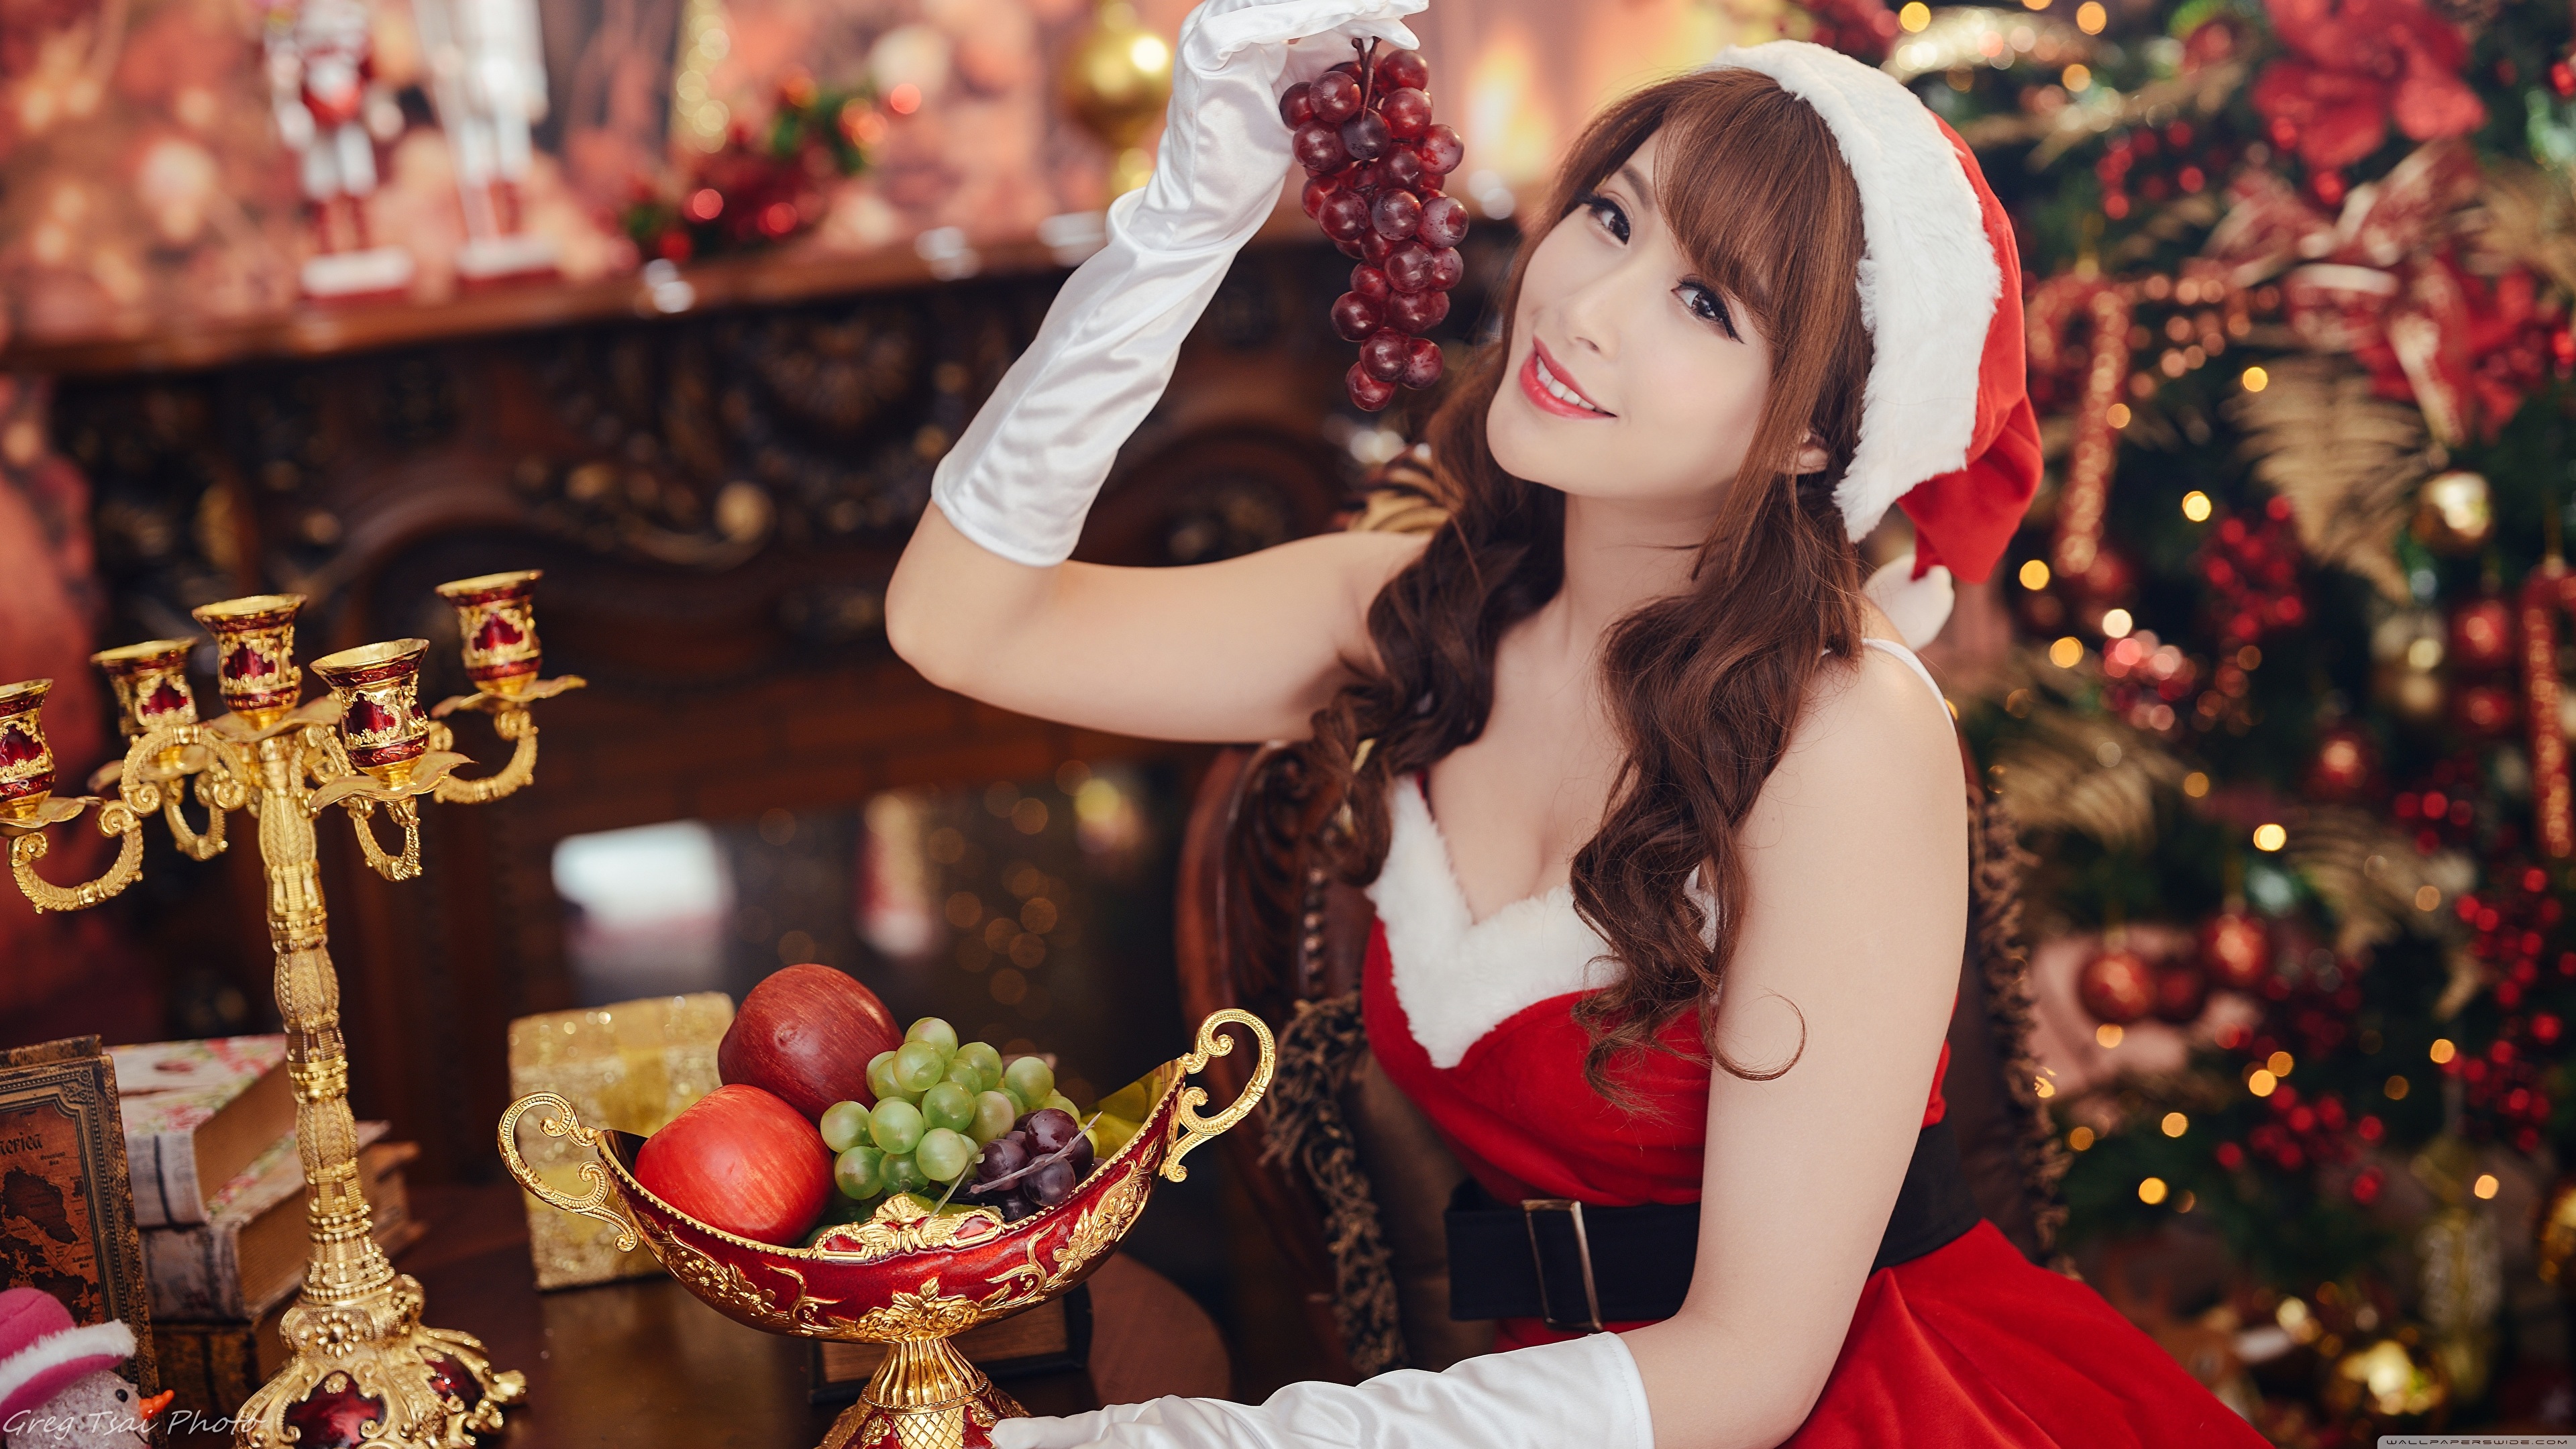 People 3840x2160 Asian model women long hair brunette Christmas red dress belt candle holder fruit bowl hat